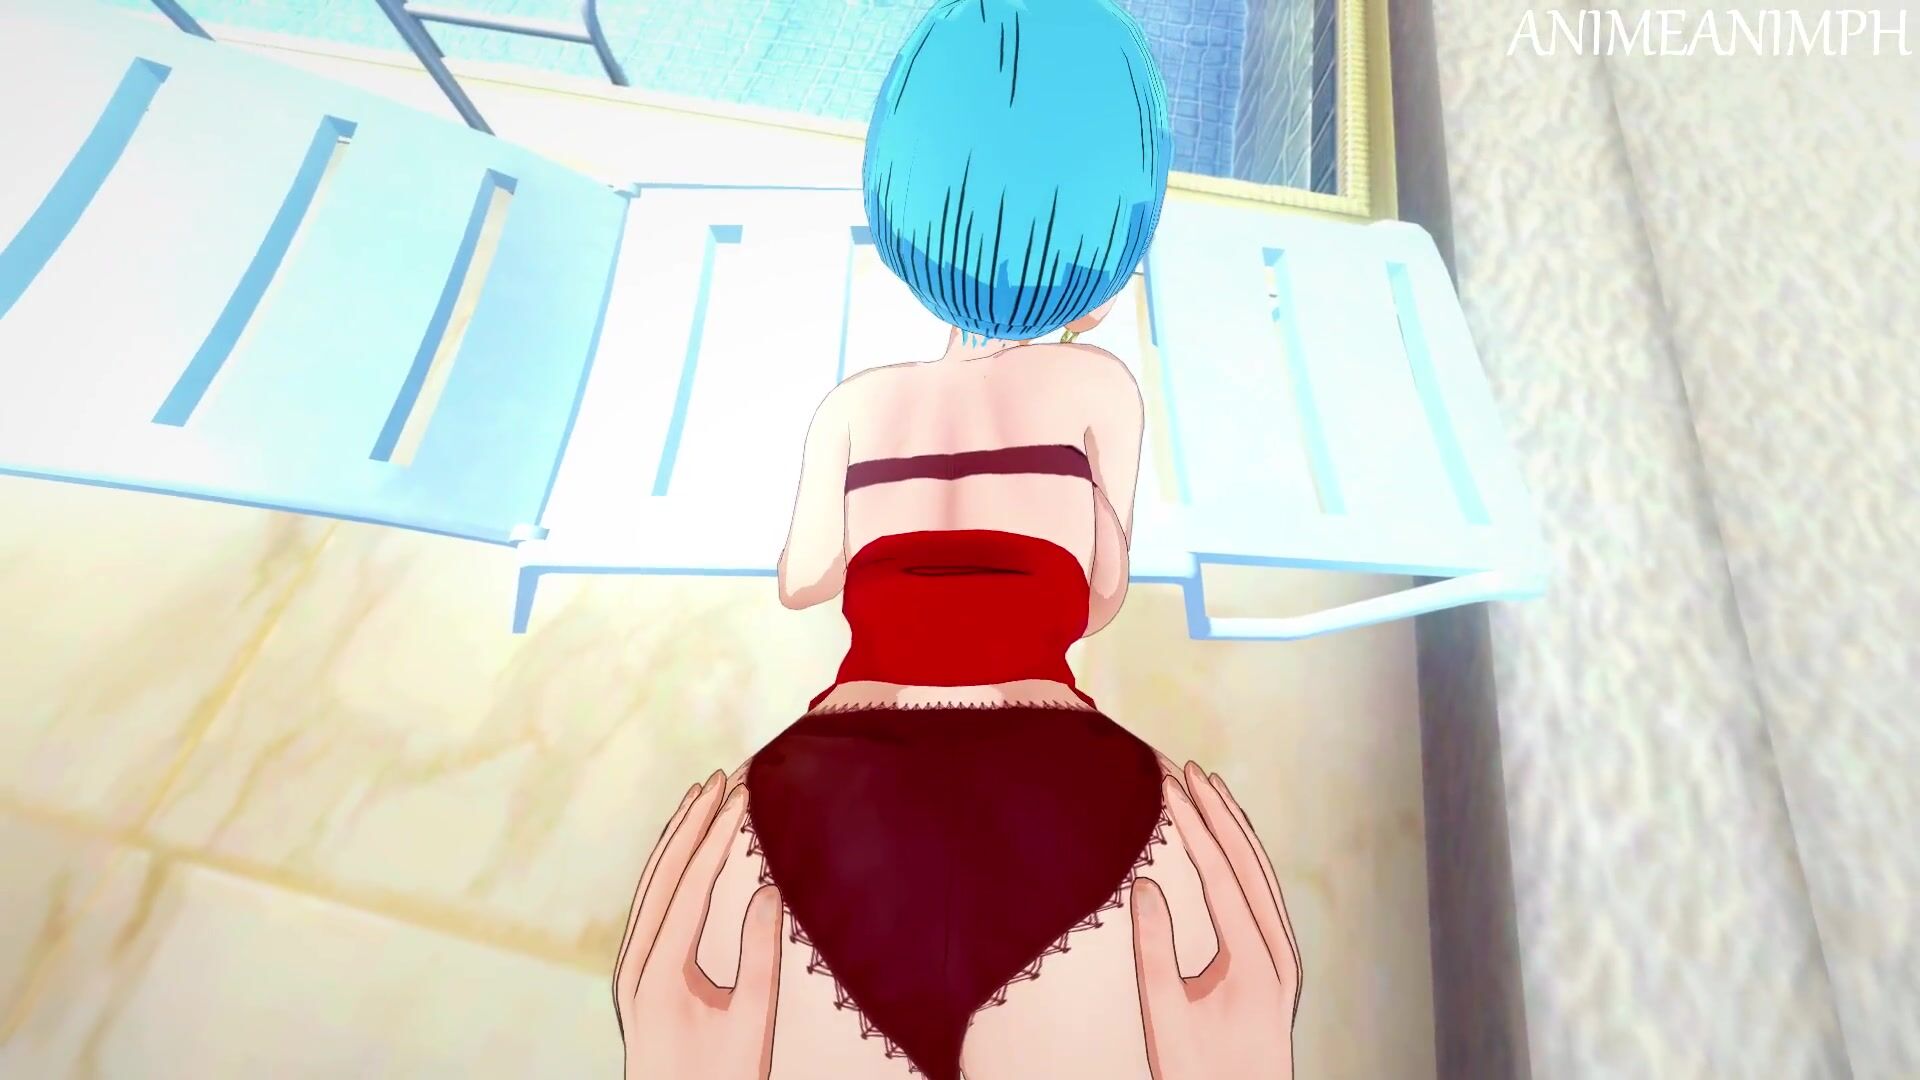 Dbz Nude Hentai - DRAGON BALL Z BULMA HENTAI 3D UNCENSORED watch online